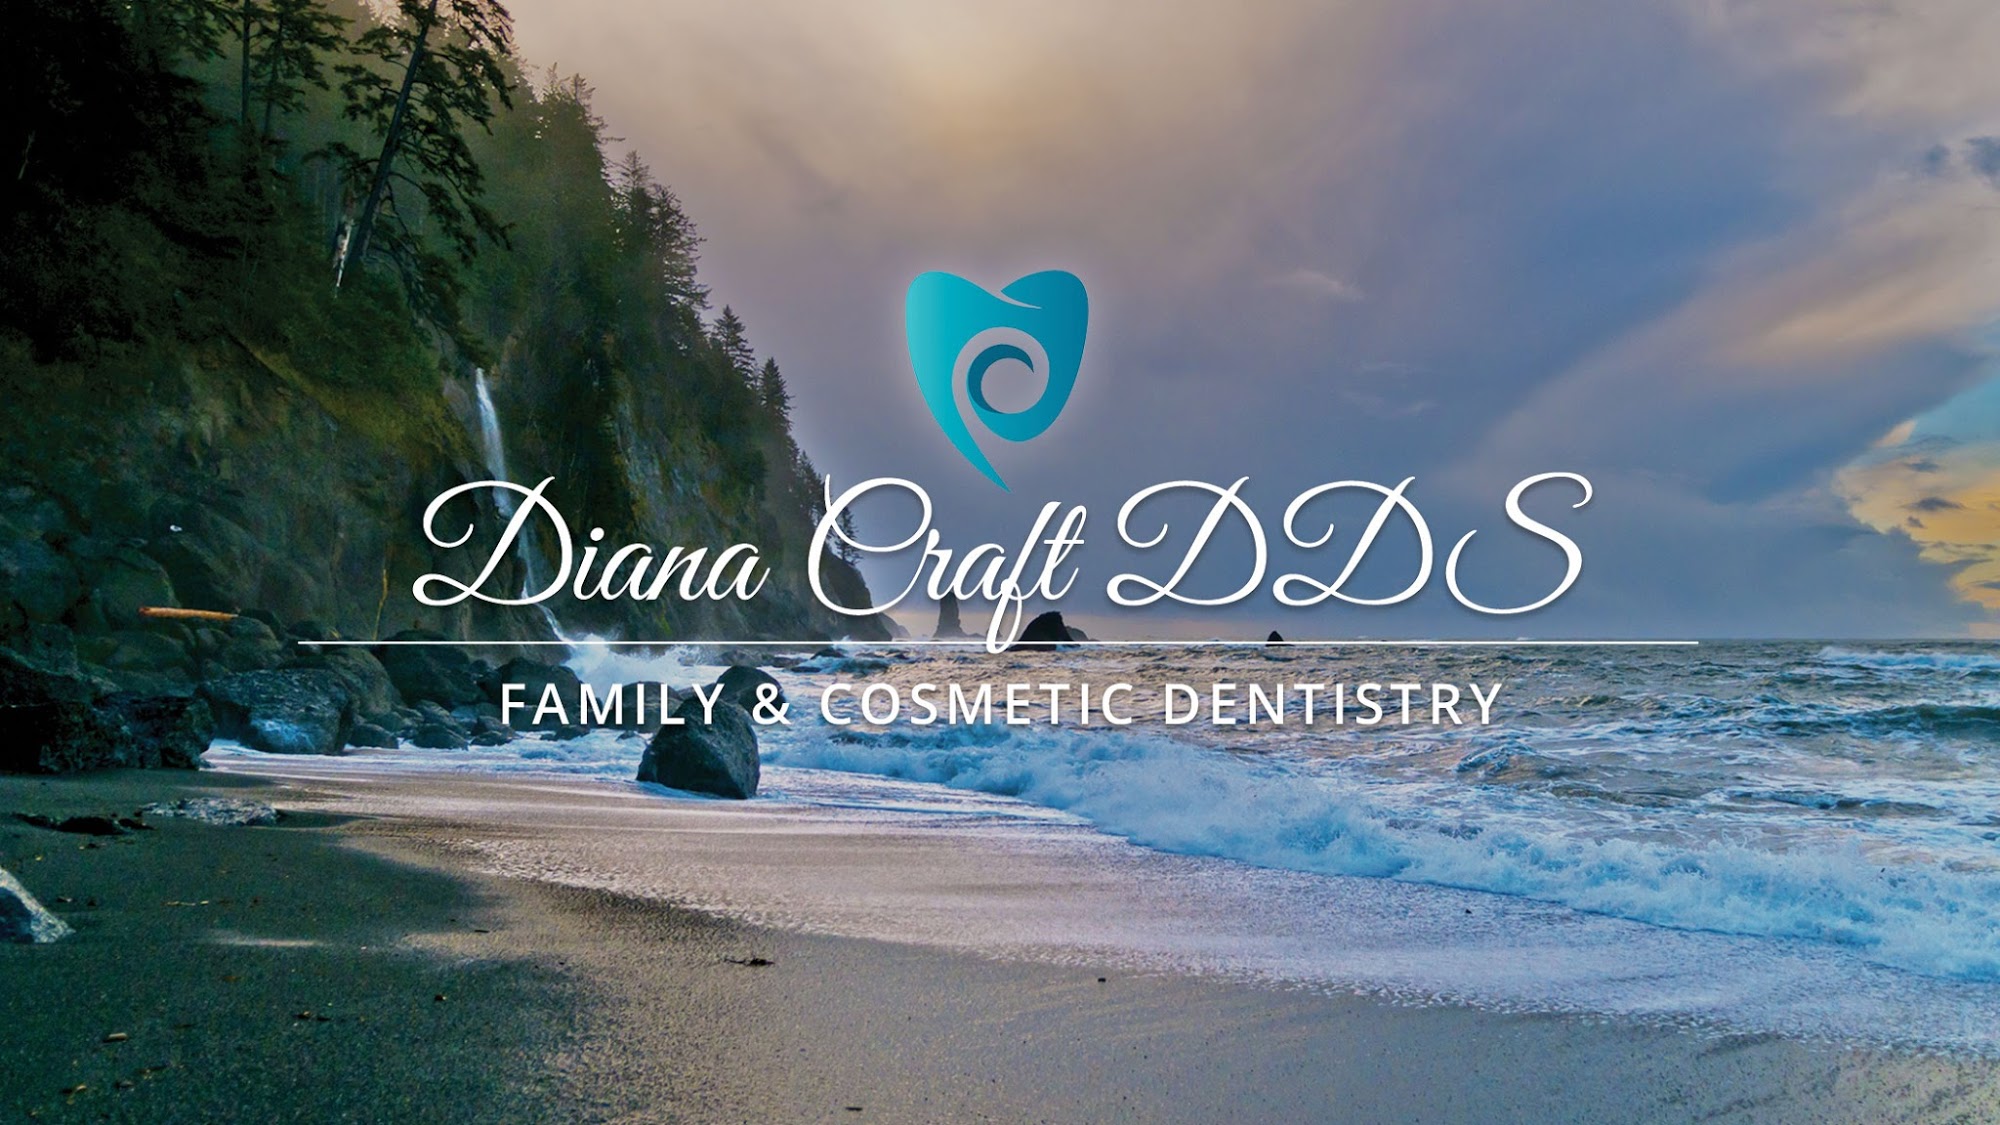 Diana Craft DDS